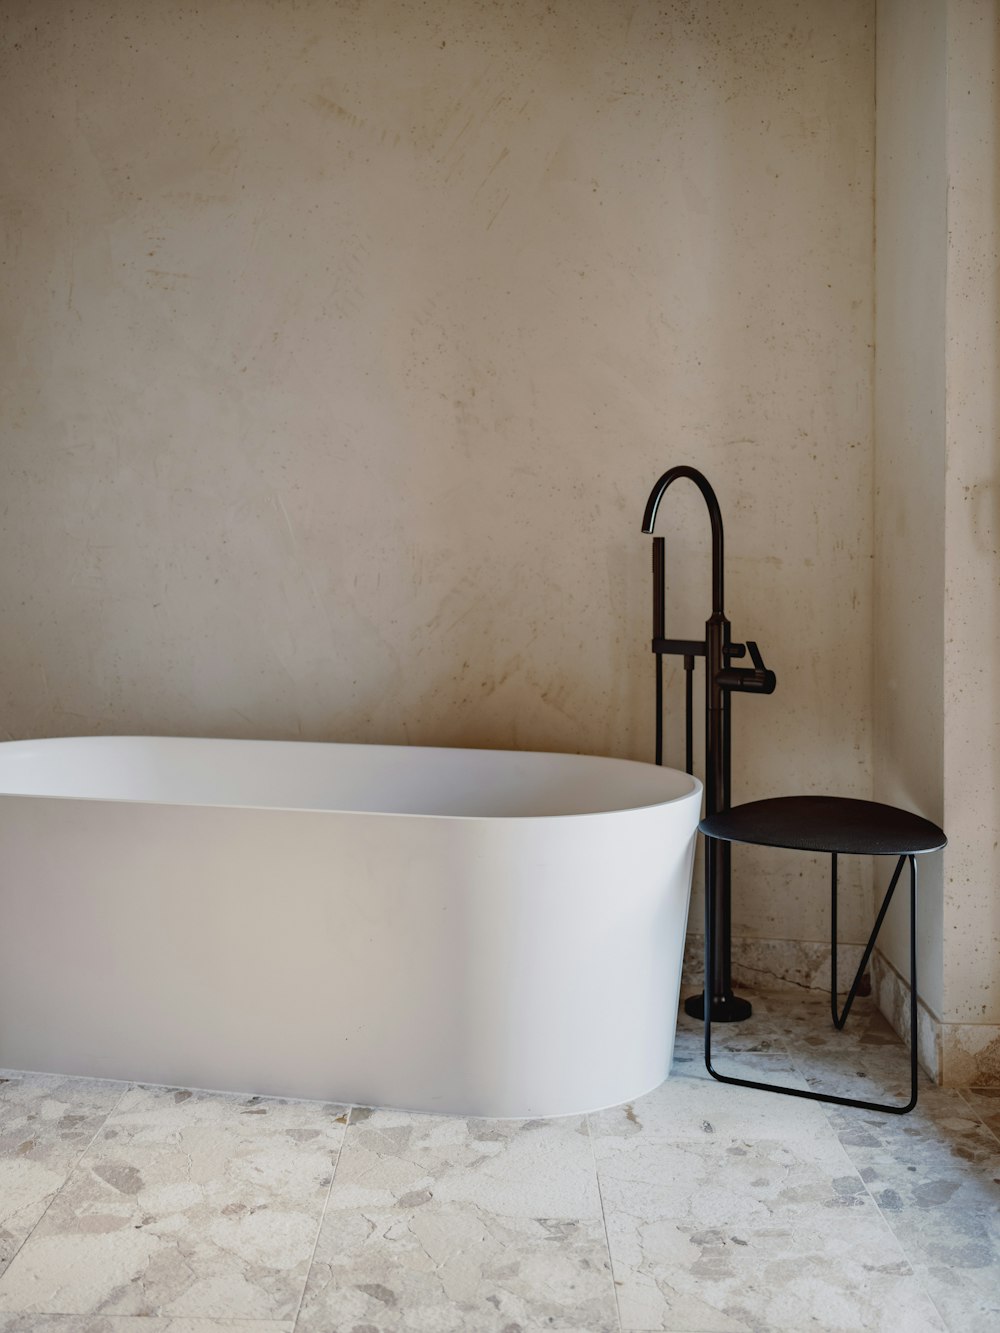 a white bath tub sitting next to a black stool